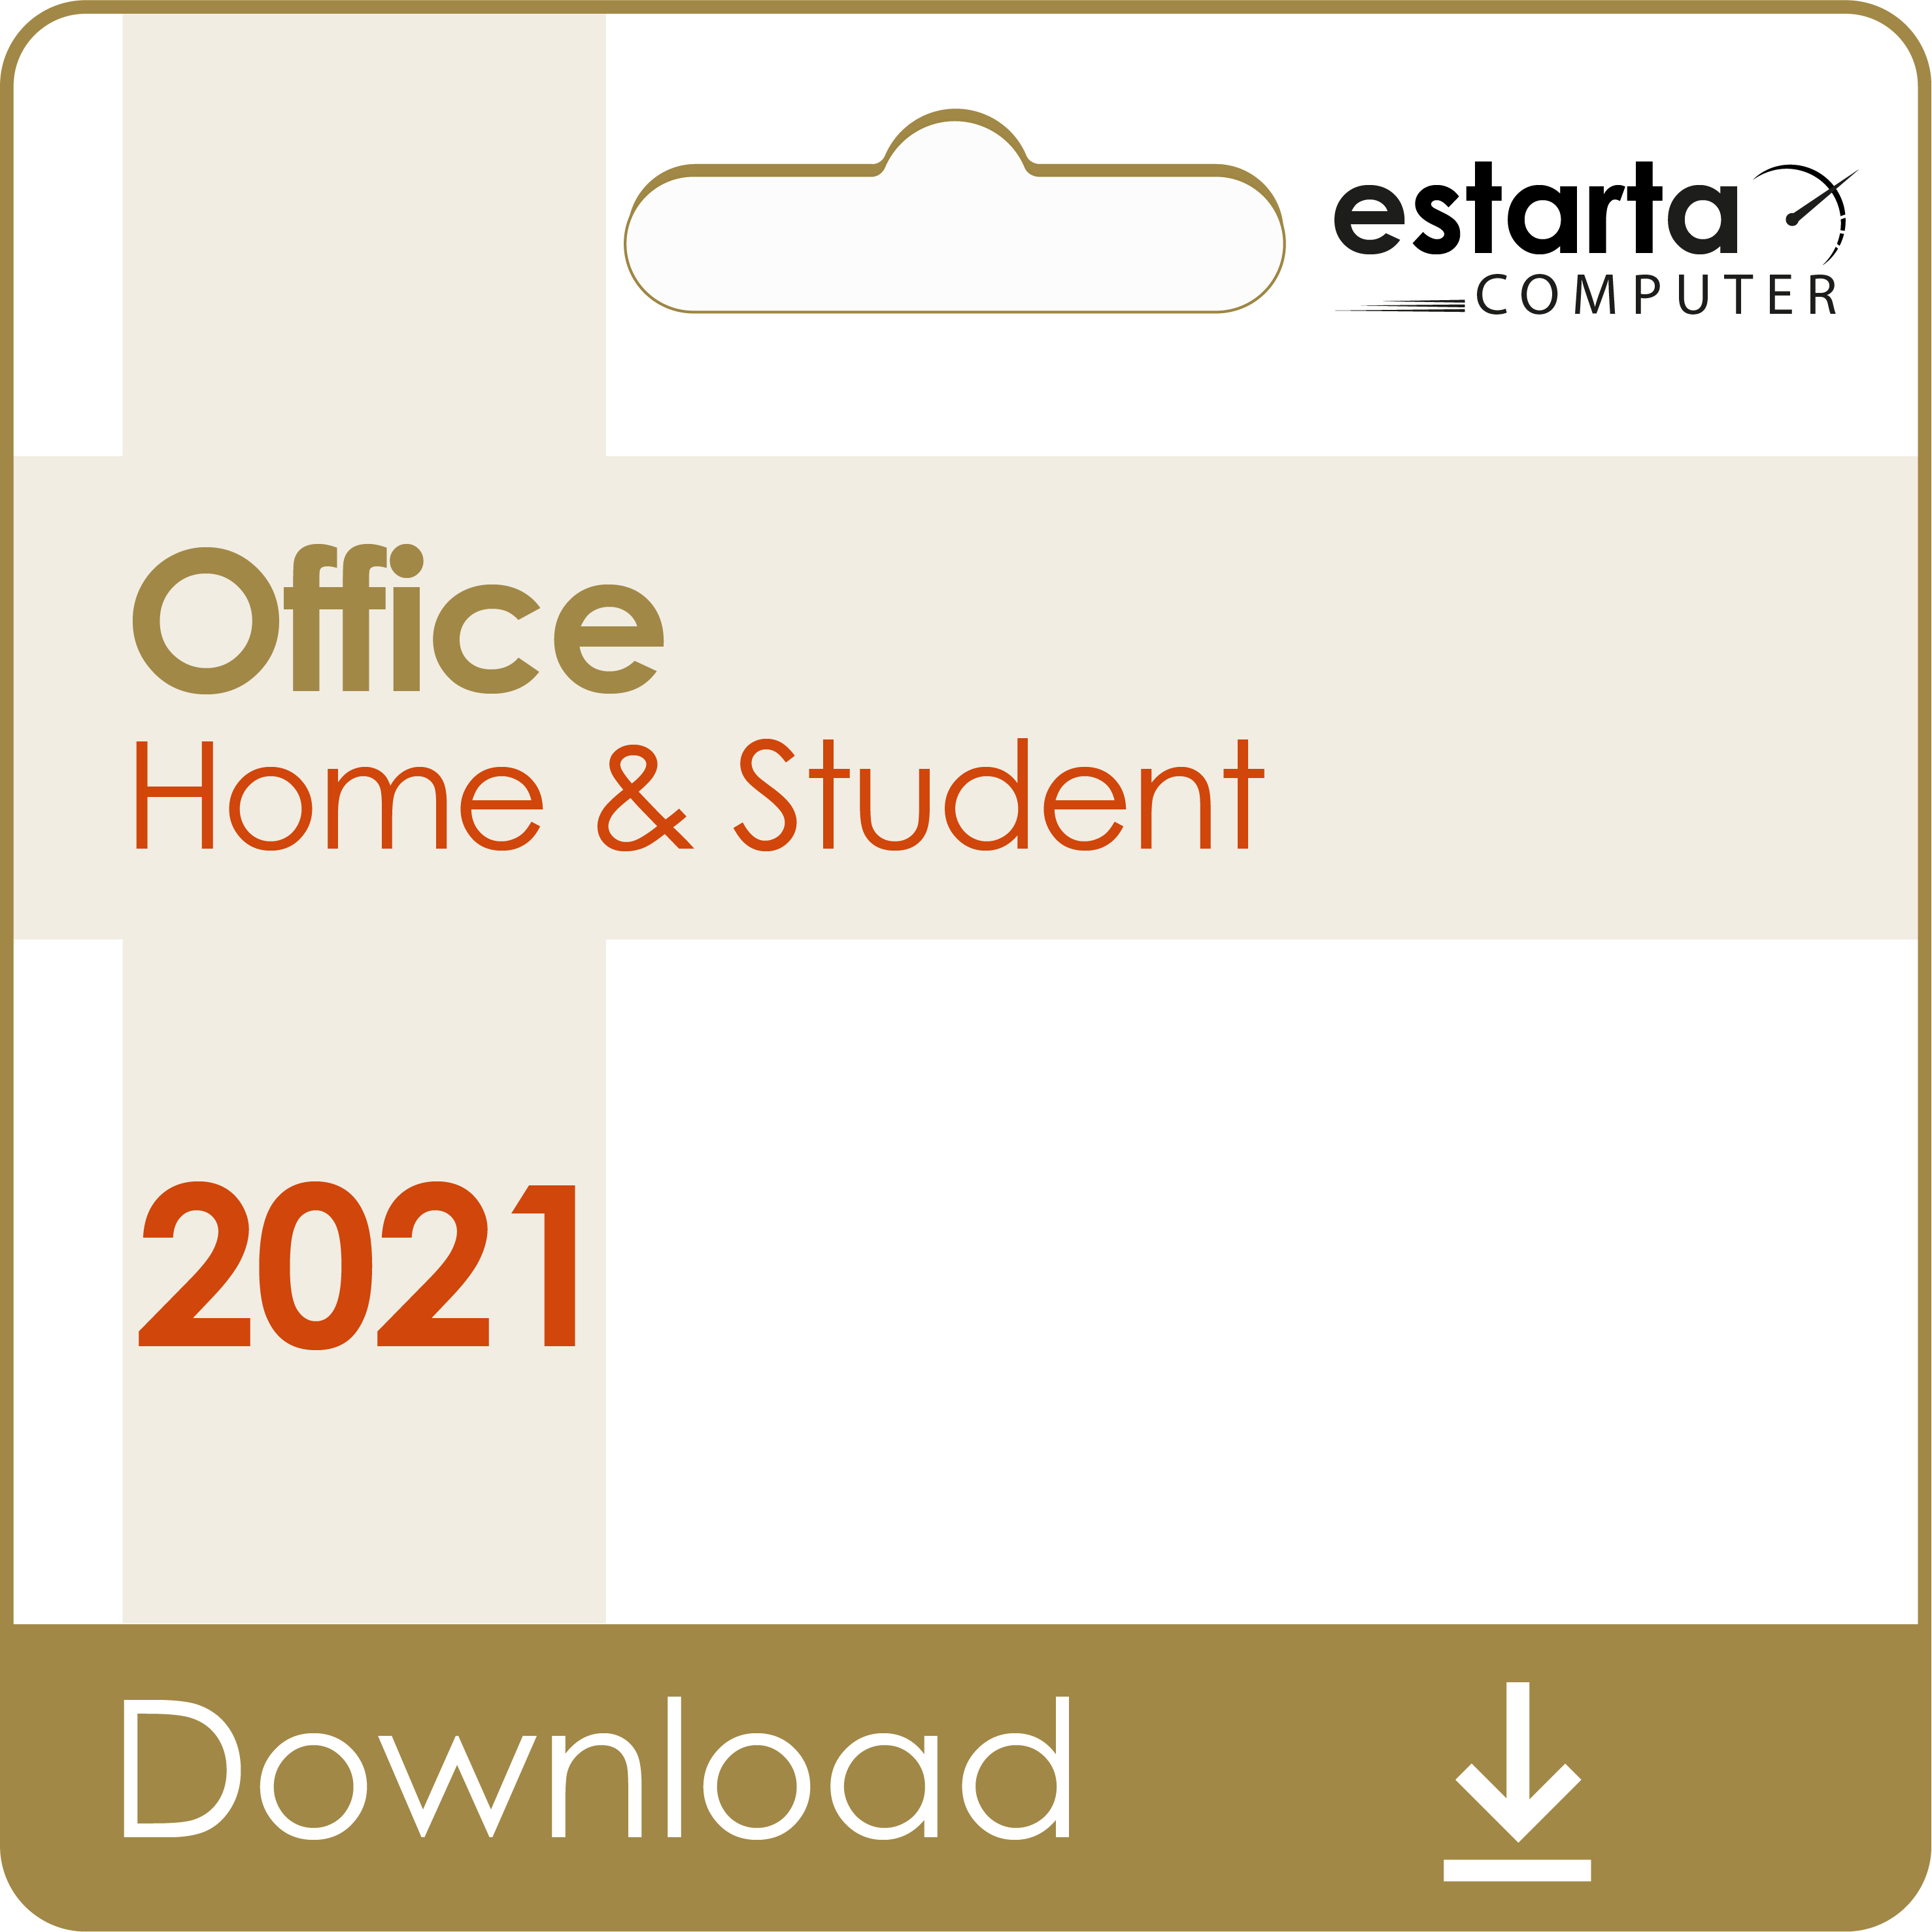 Microsoft Office Home & Student 2021 Windows